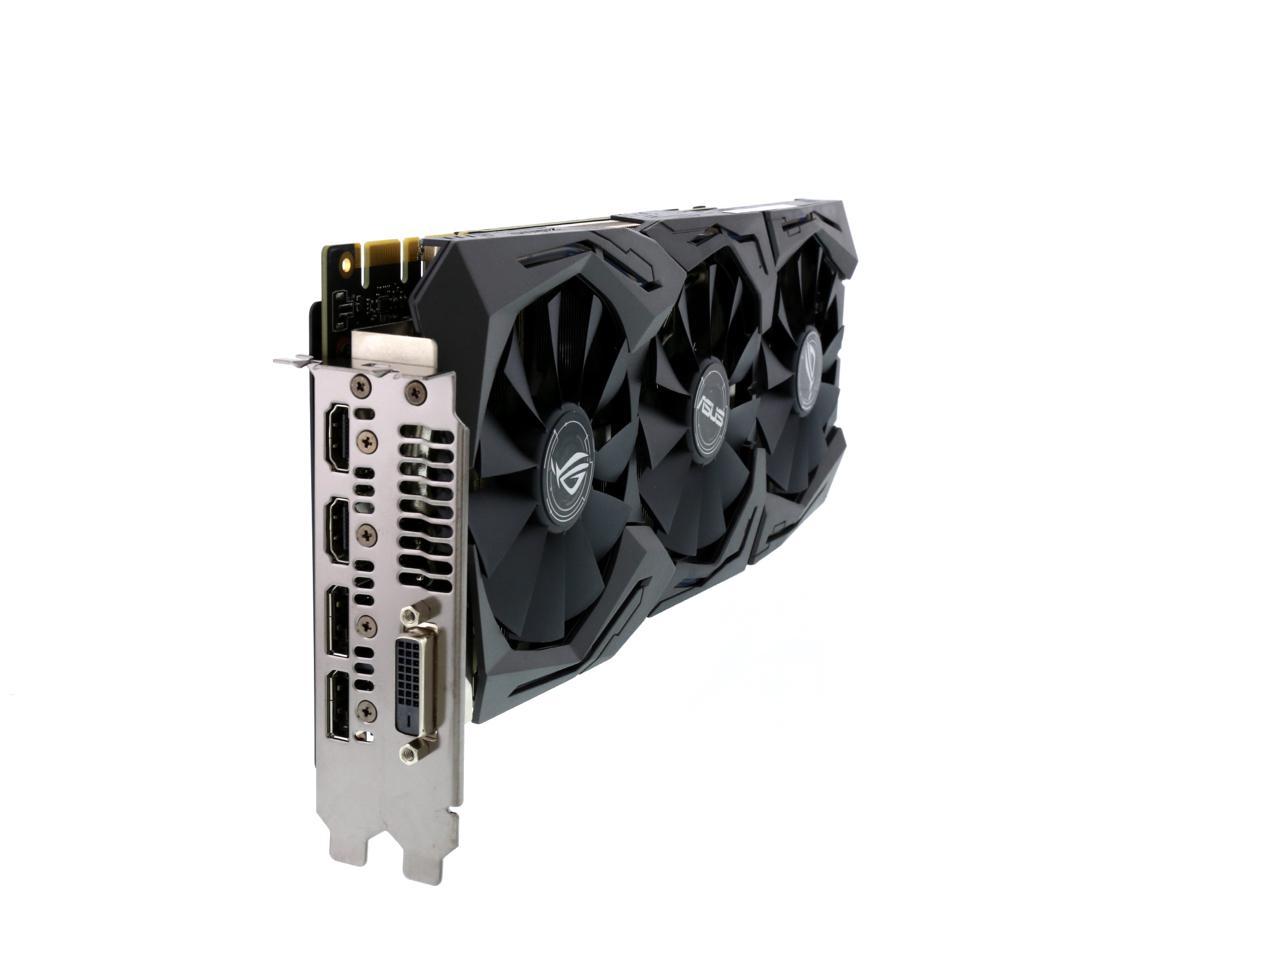 ASUS GeForce GTX 1070 8GB GDDR5 PCI Express 3.0 Video Card  STRIX-GTX1070-8G-GAMING